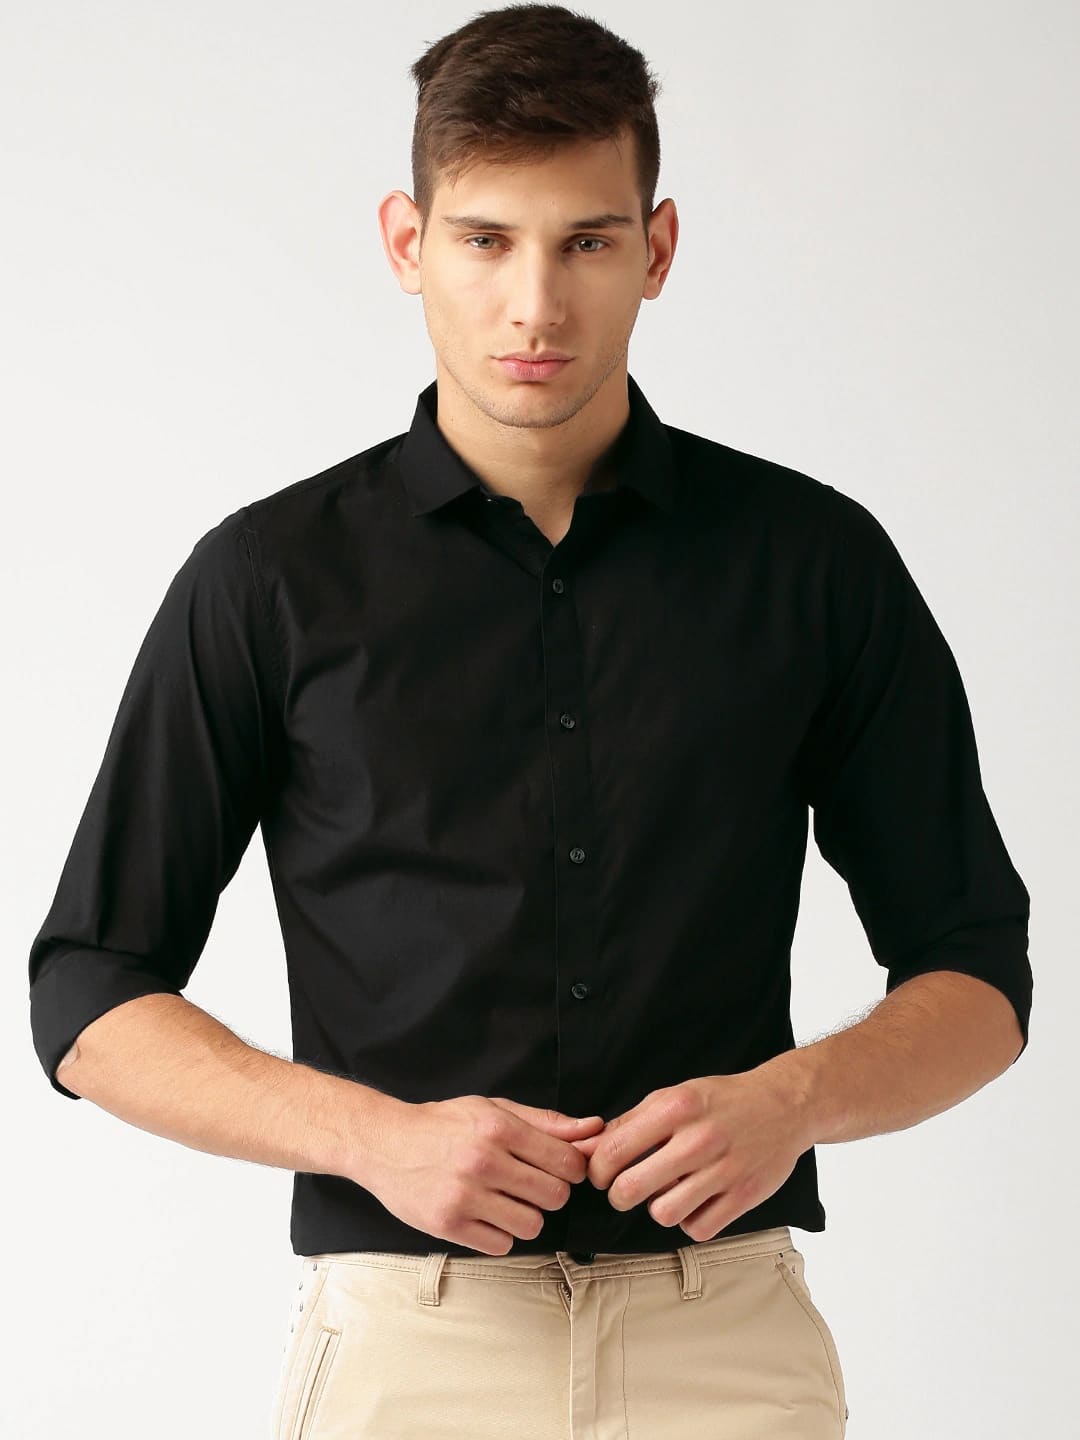 Men's Black Formal Shirt Hirawats